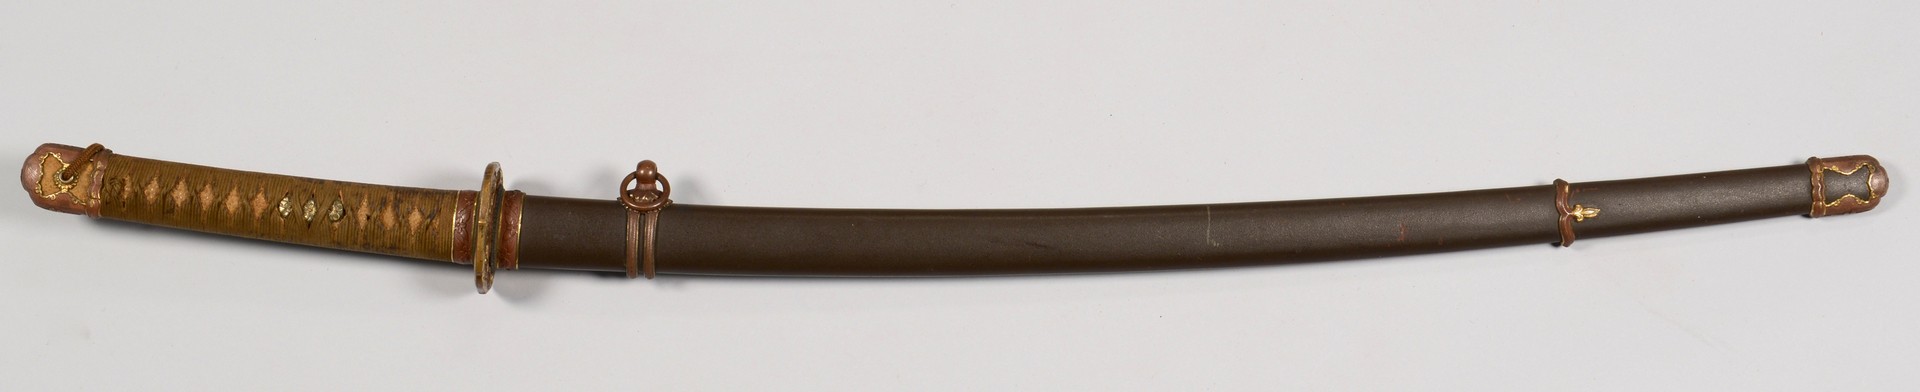 Lot 532: WWII Era Japanese Sword w/ Bronze Mounts